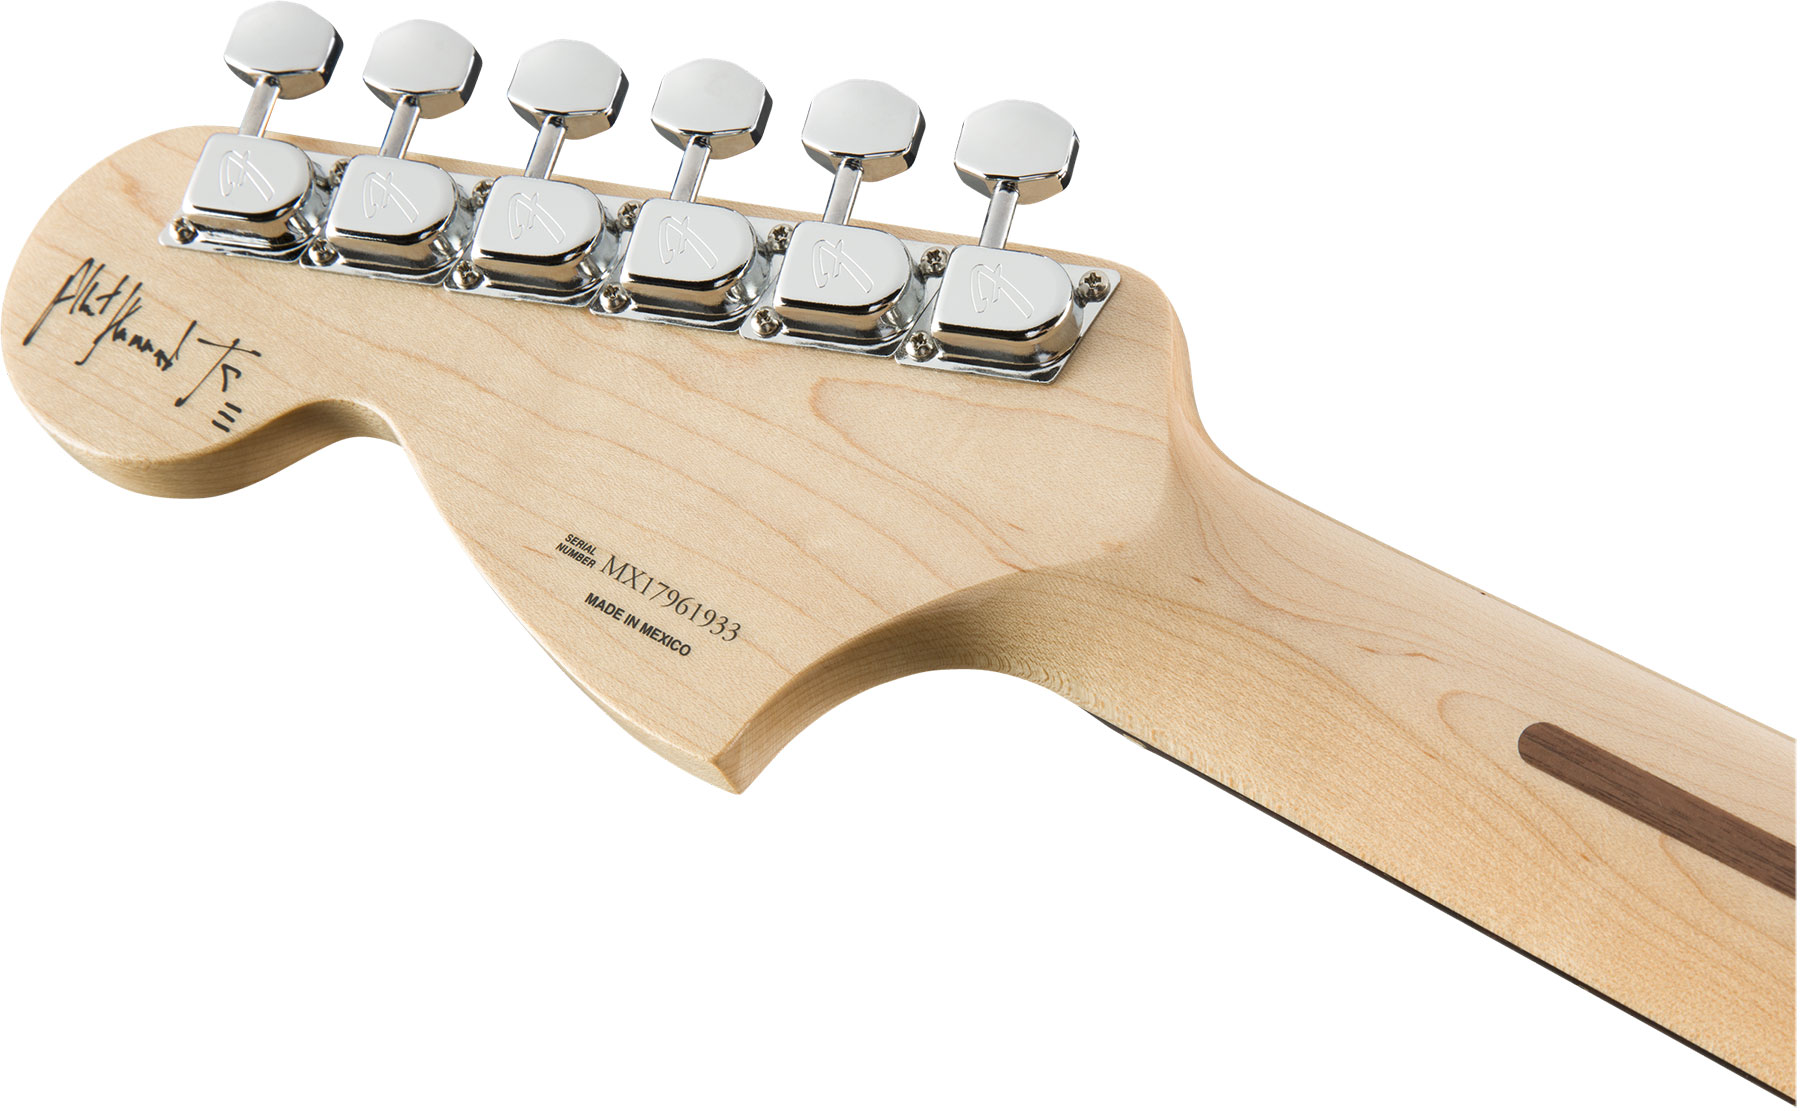 Fender Albert Hammond Strat Mex Signature 3s Trem Rw - Olympic White - Str shape electric guitar - Variation 3